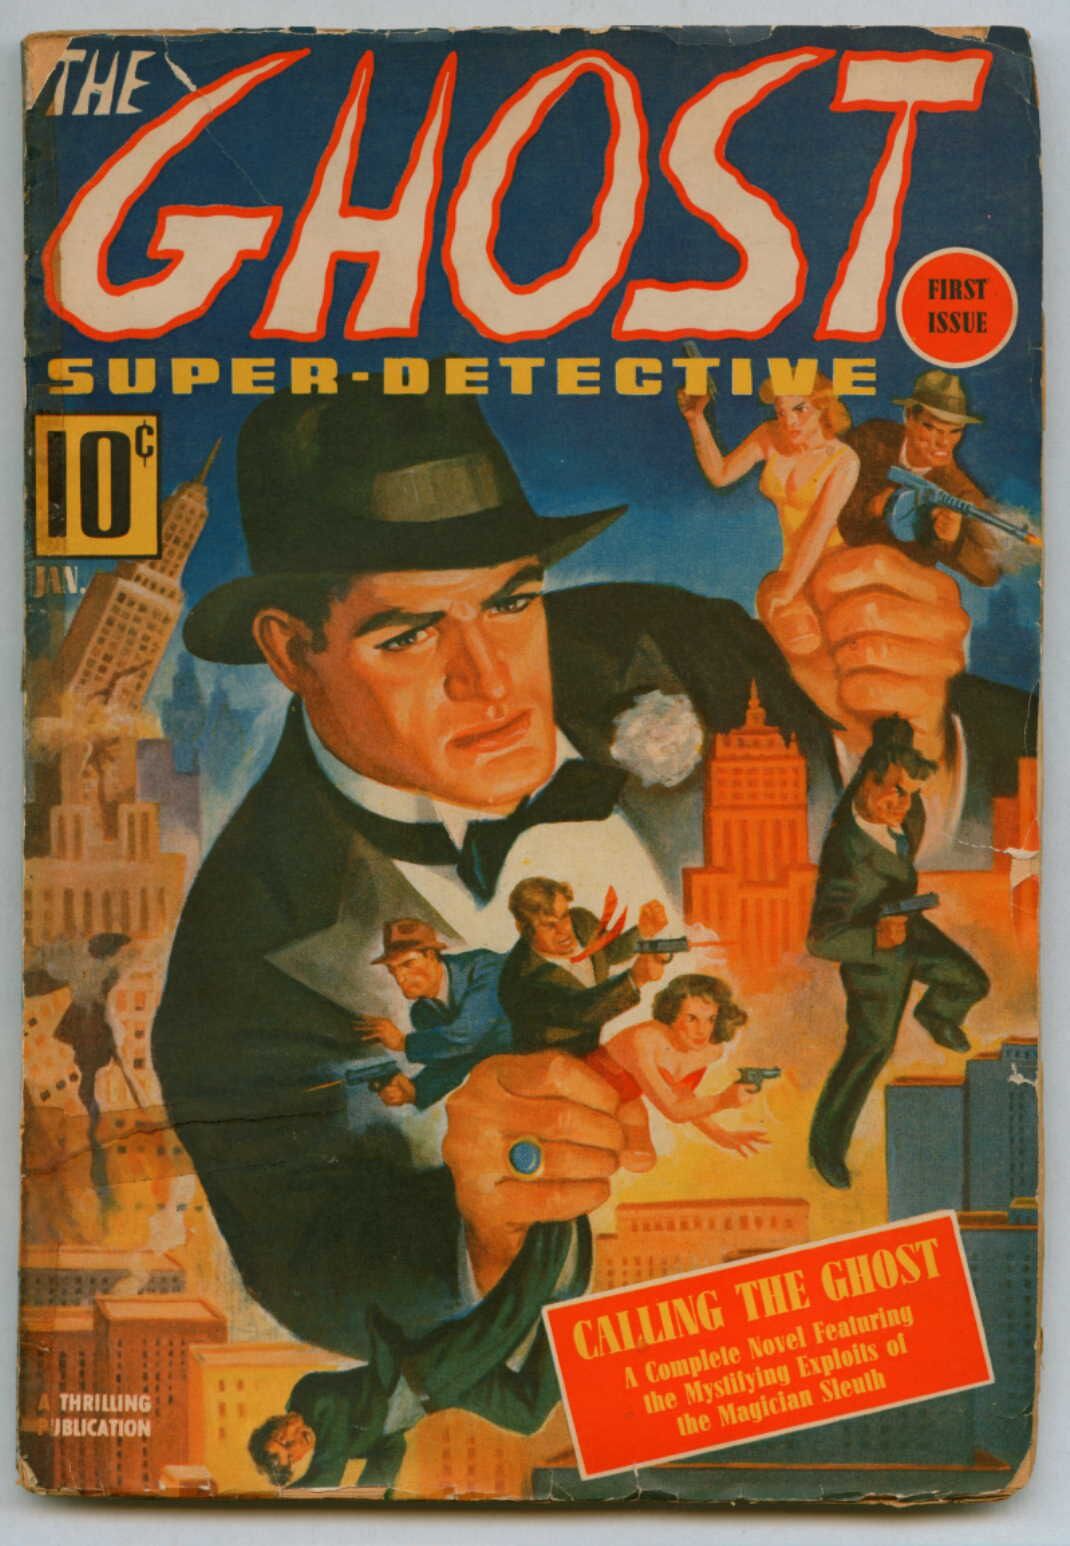 The Ghost Super-Detective 1940 Januar